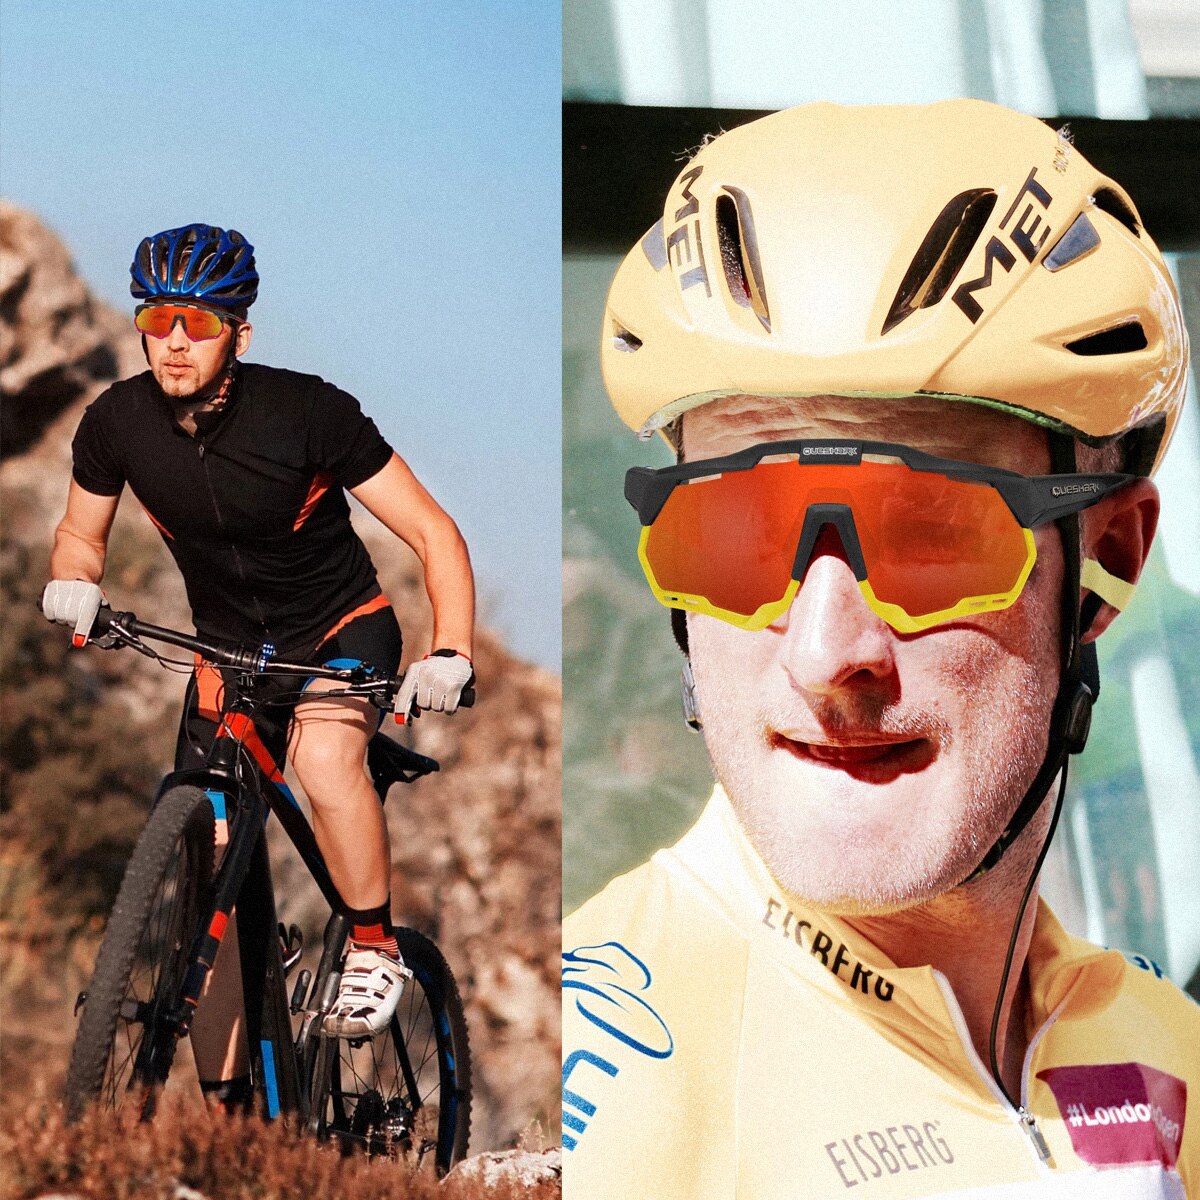 QE52 Carbon Fiber Polarized Cycling Glasses Men Women Sport Sunglasses with Replaceable Frame/Lens